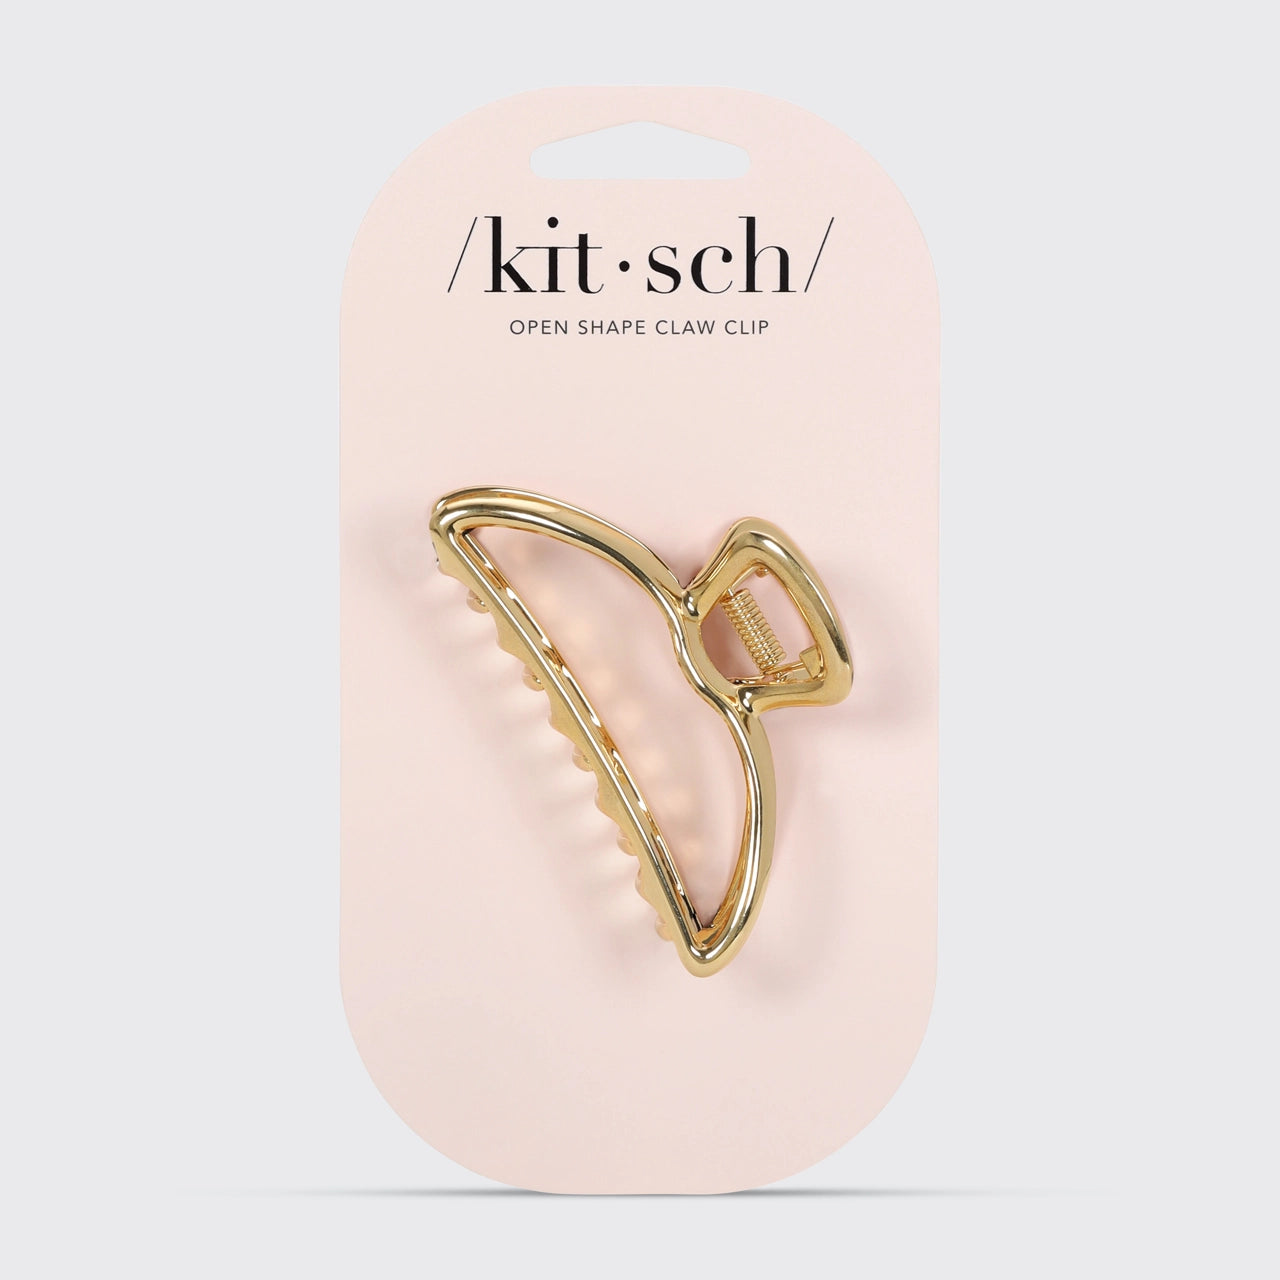 Kitsch Open Shape Claw Clip